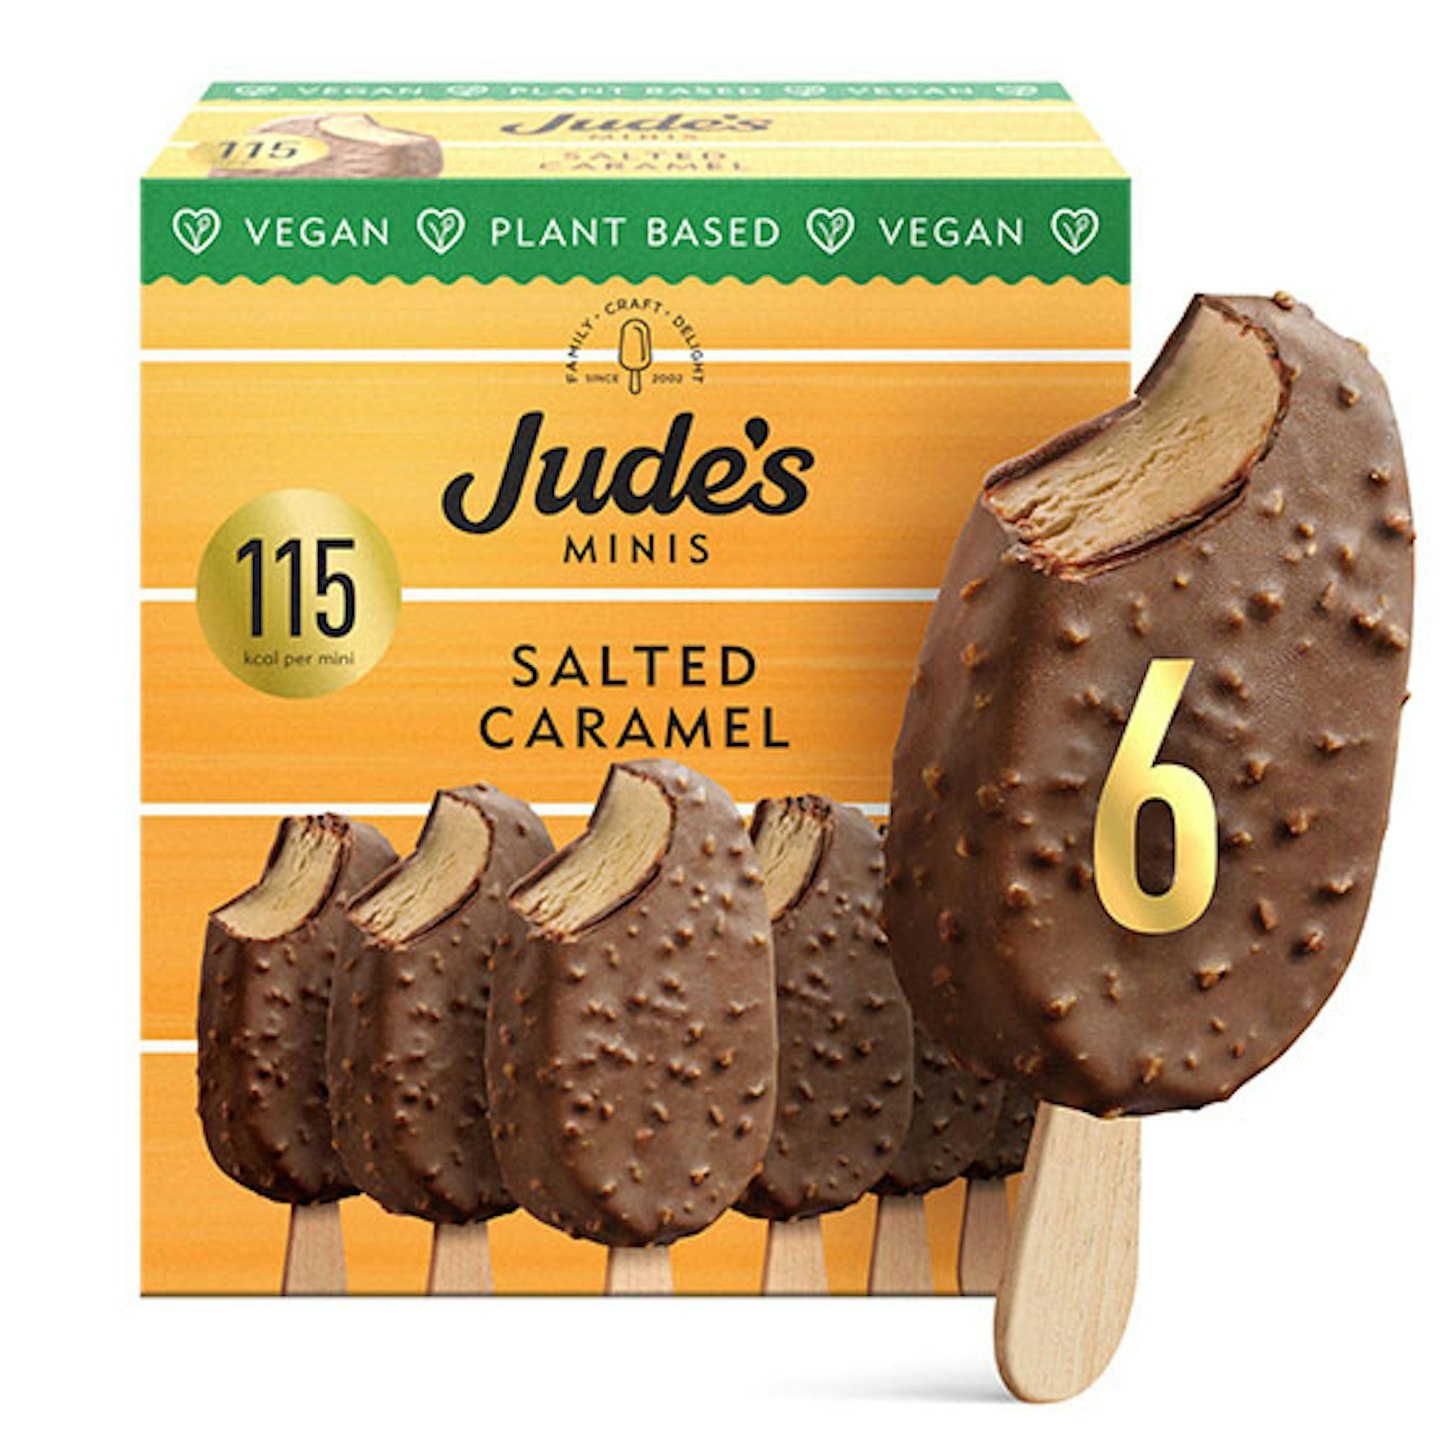 Jude's vegan ice cream